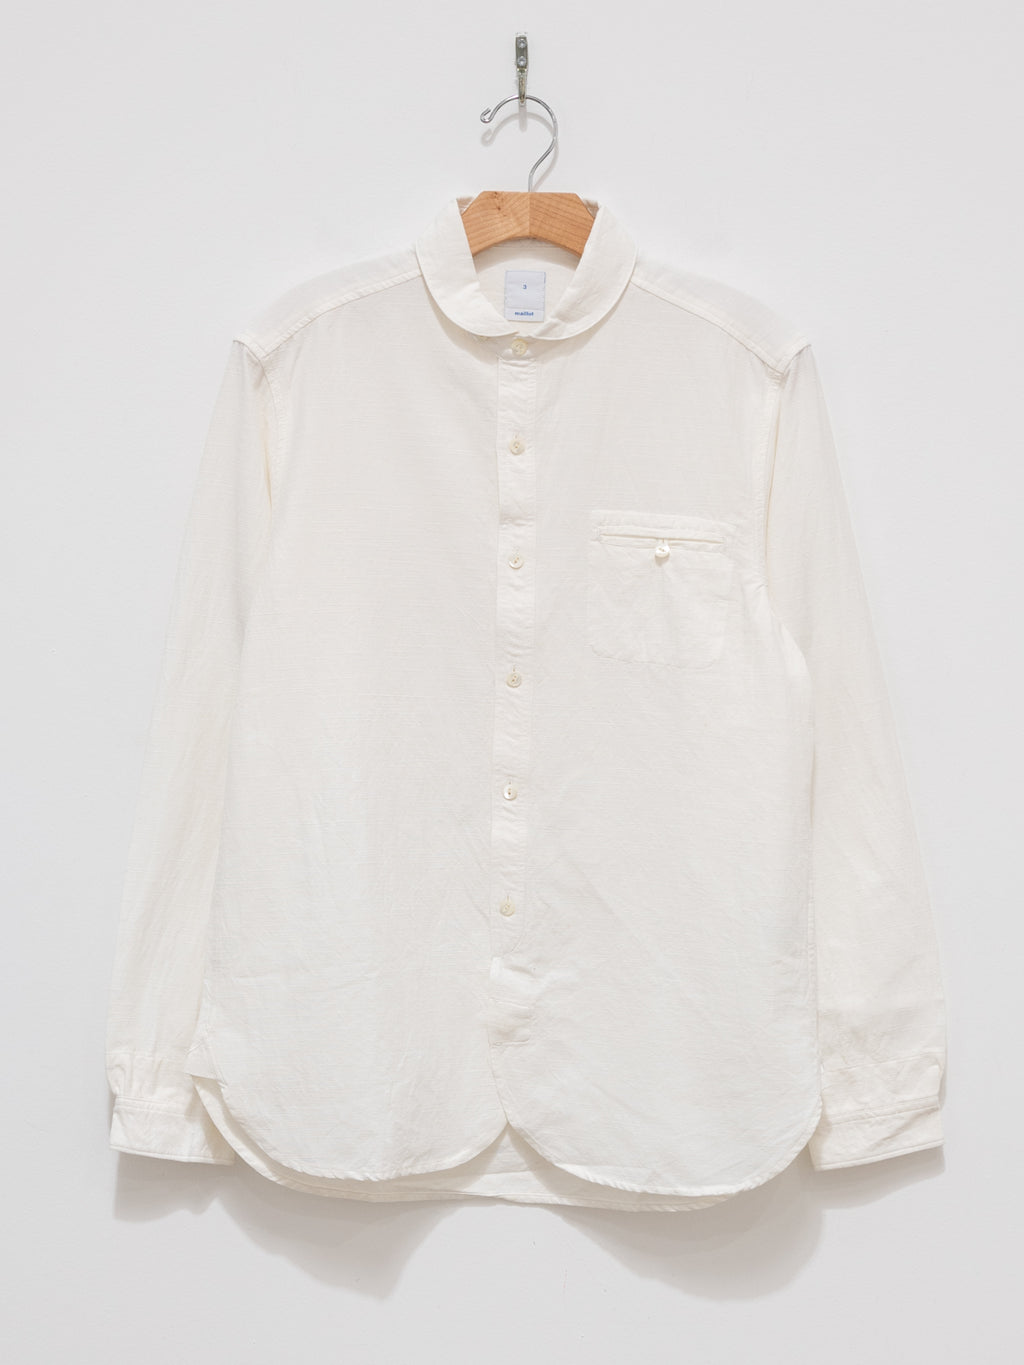 Namu Shop - Maillot Sunset Work Shirt - White